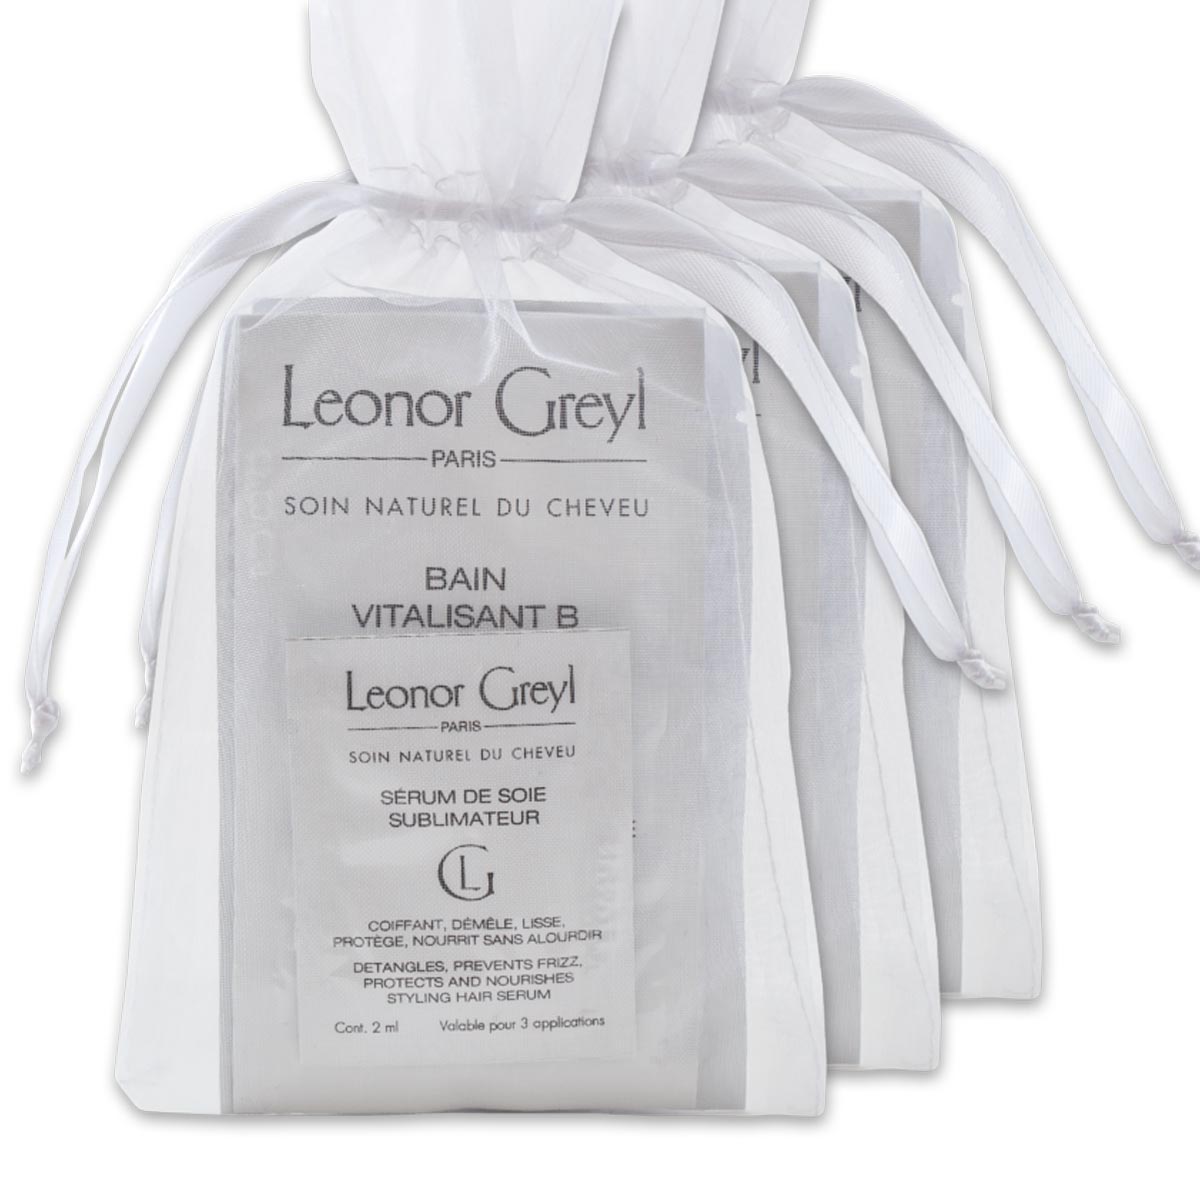 Luxury Sample Sets: Buy All Three - Leonor Greyl USA